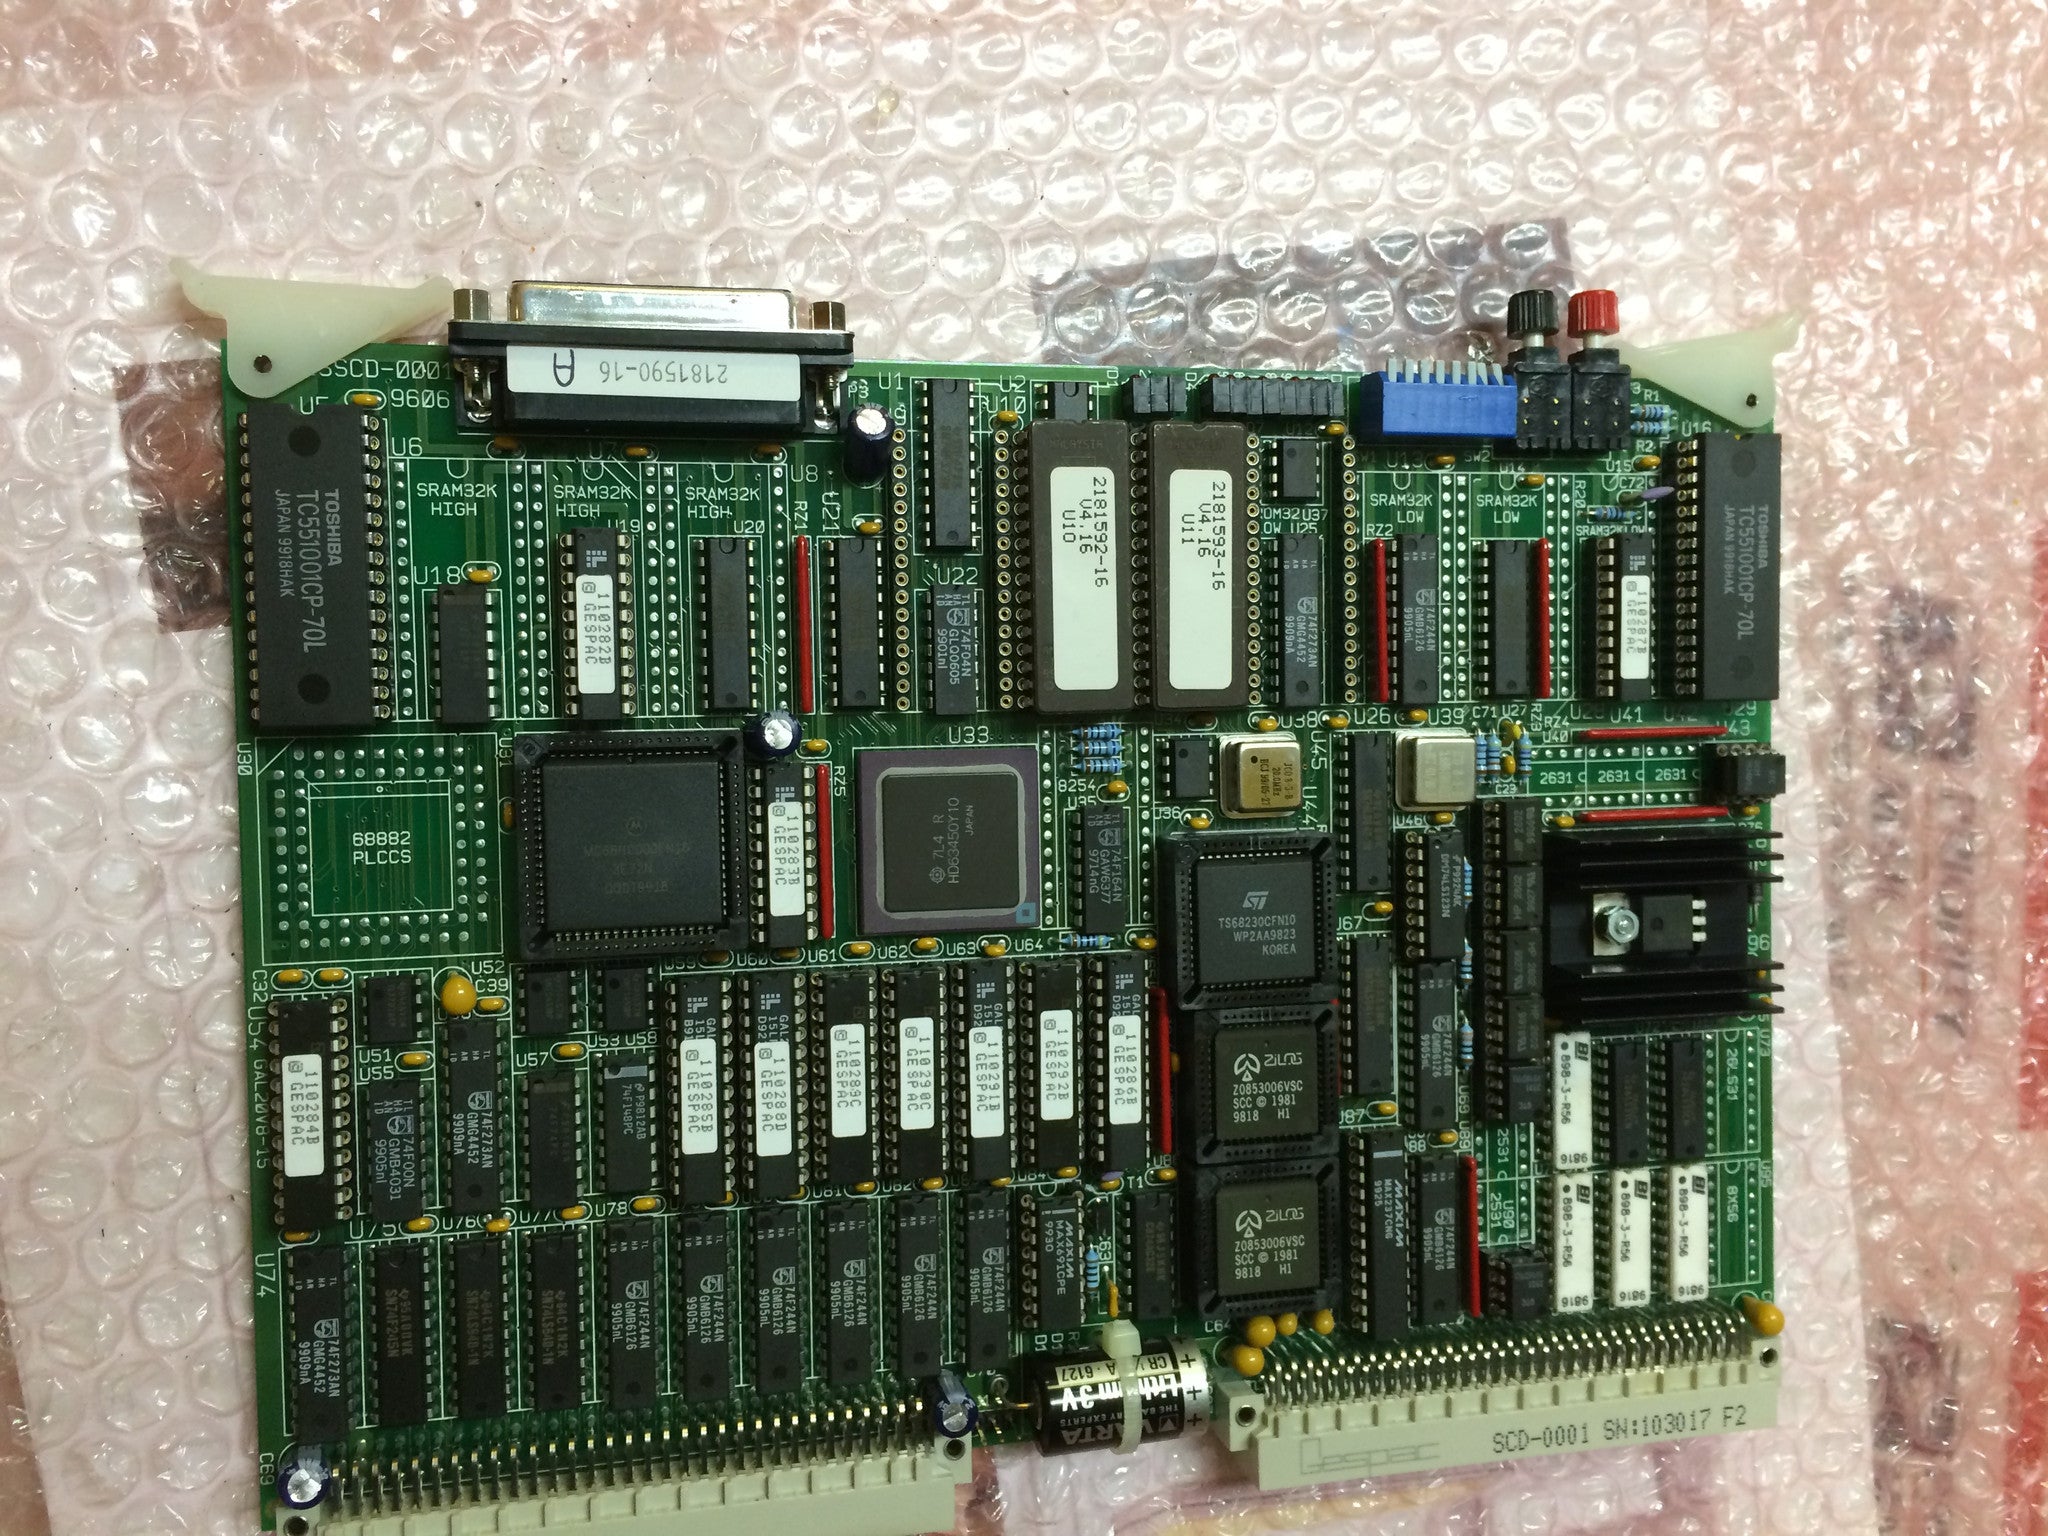 218159016 MPPU CPU Board for GE Cath / Angio Lab - Anatolia International, Parts - 1